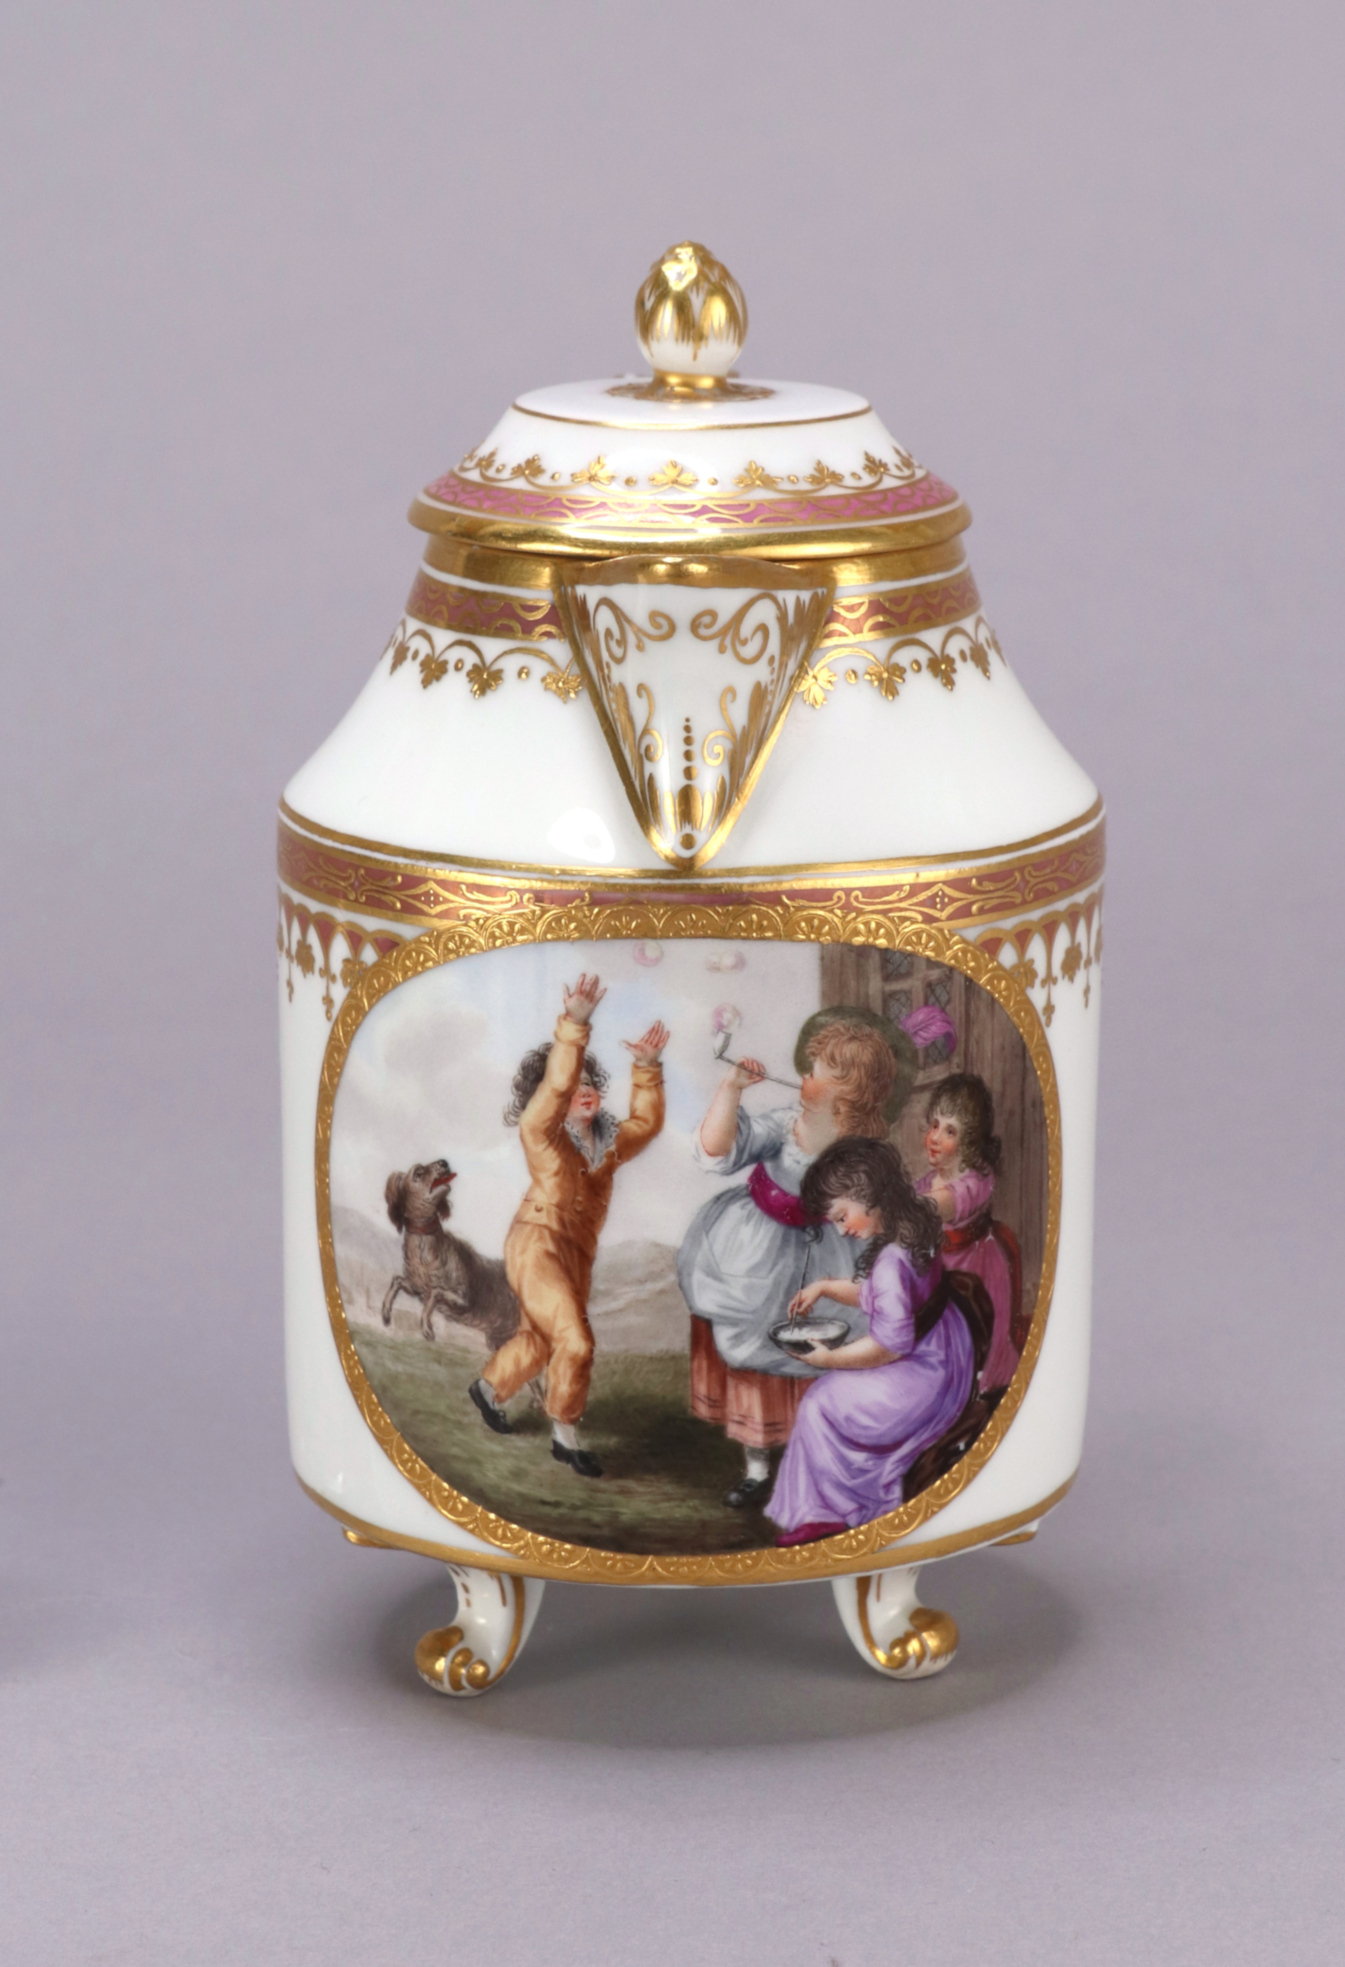 Vienna Porcelain Covered Milk Jug, c. 1794